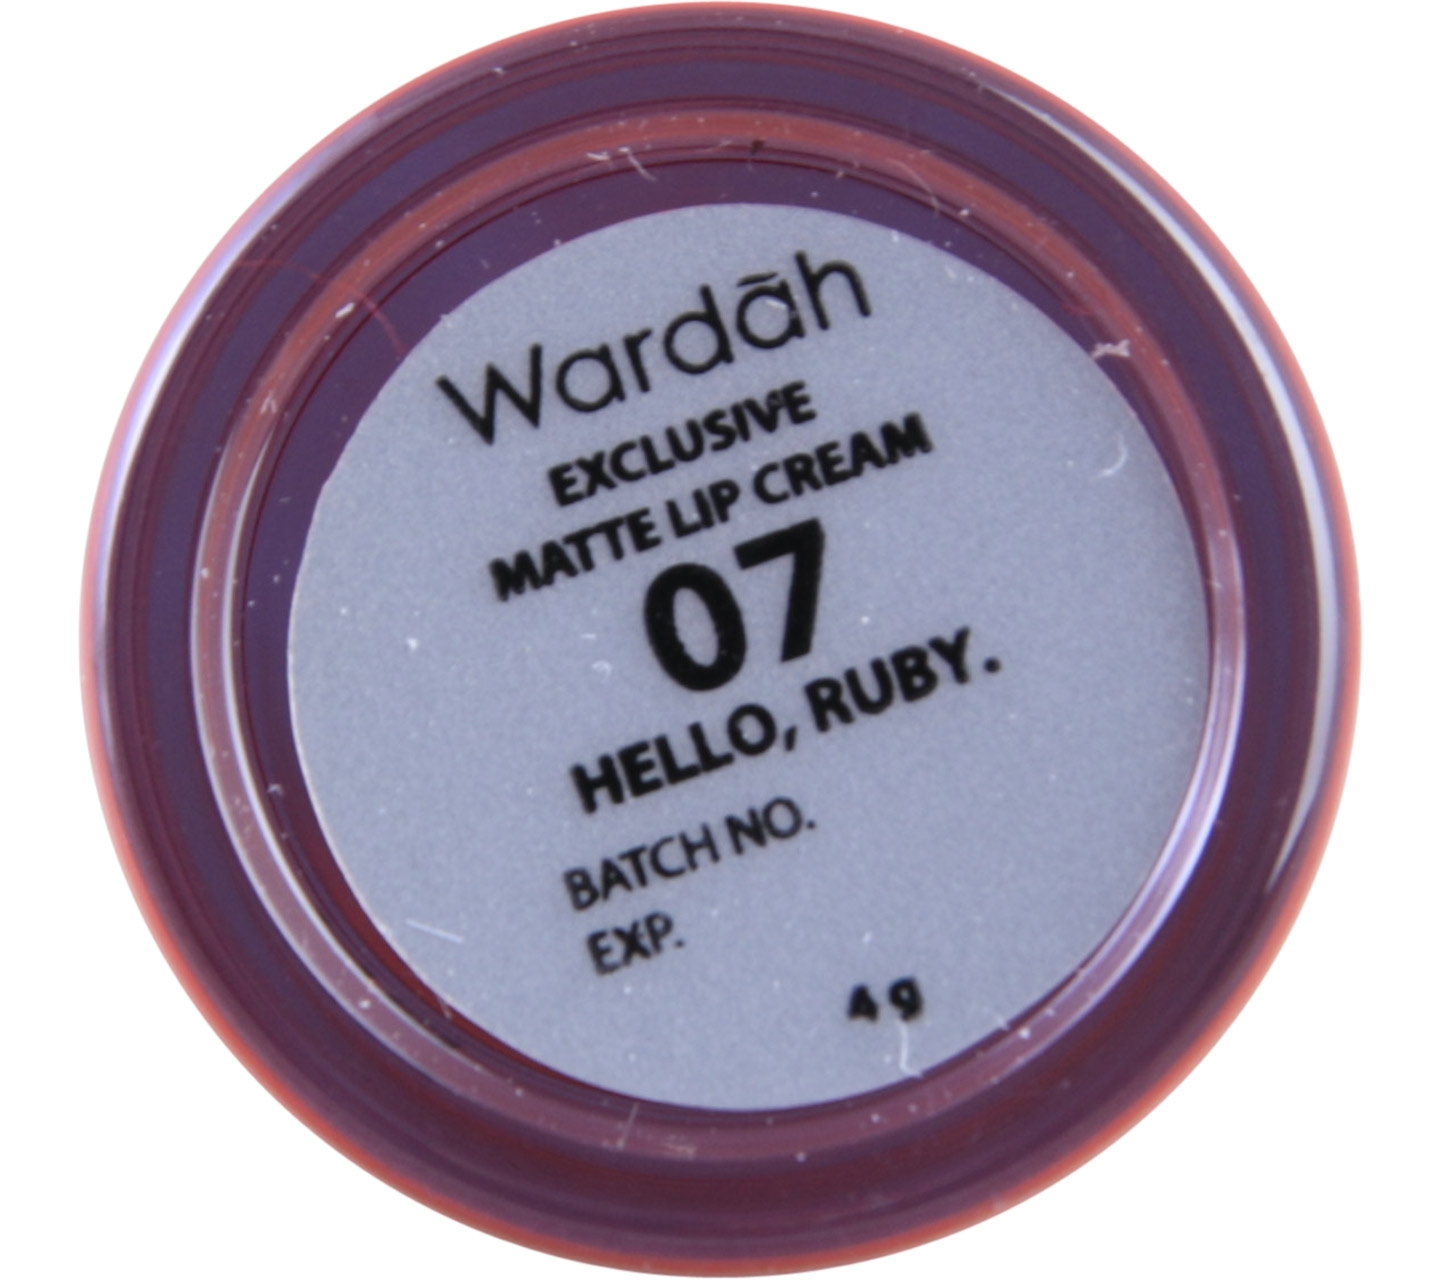 Wardah Hello Rubby 07 Exclusive Matte Lip cream Lips